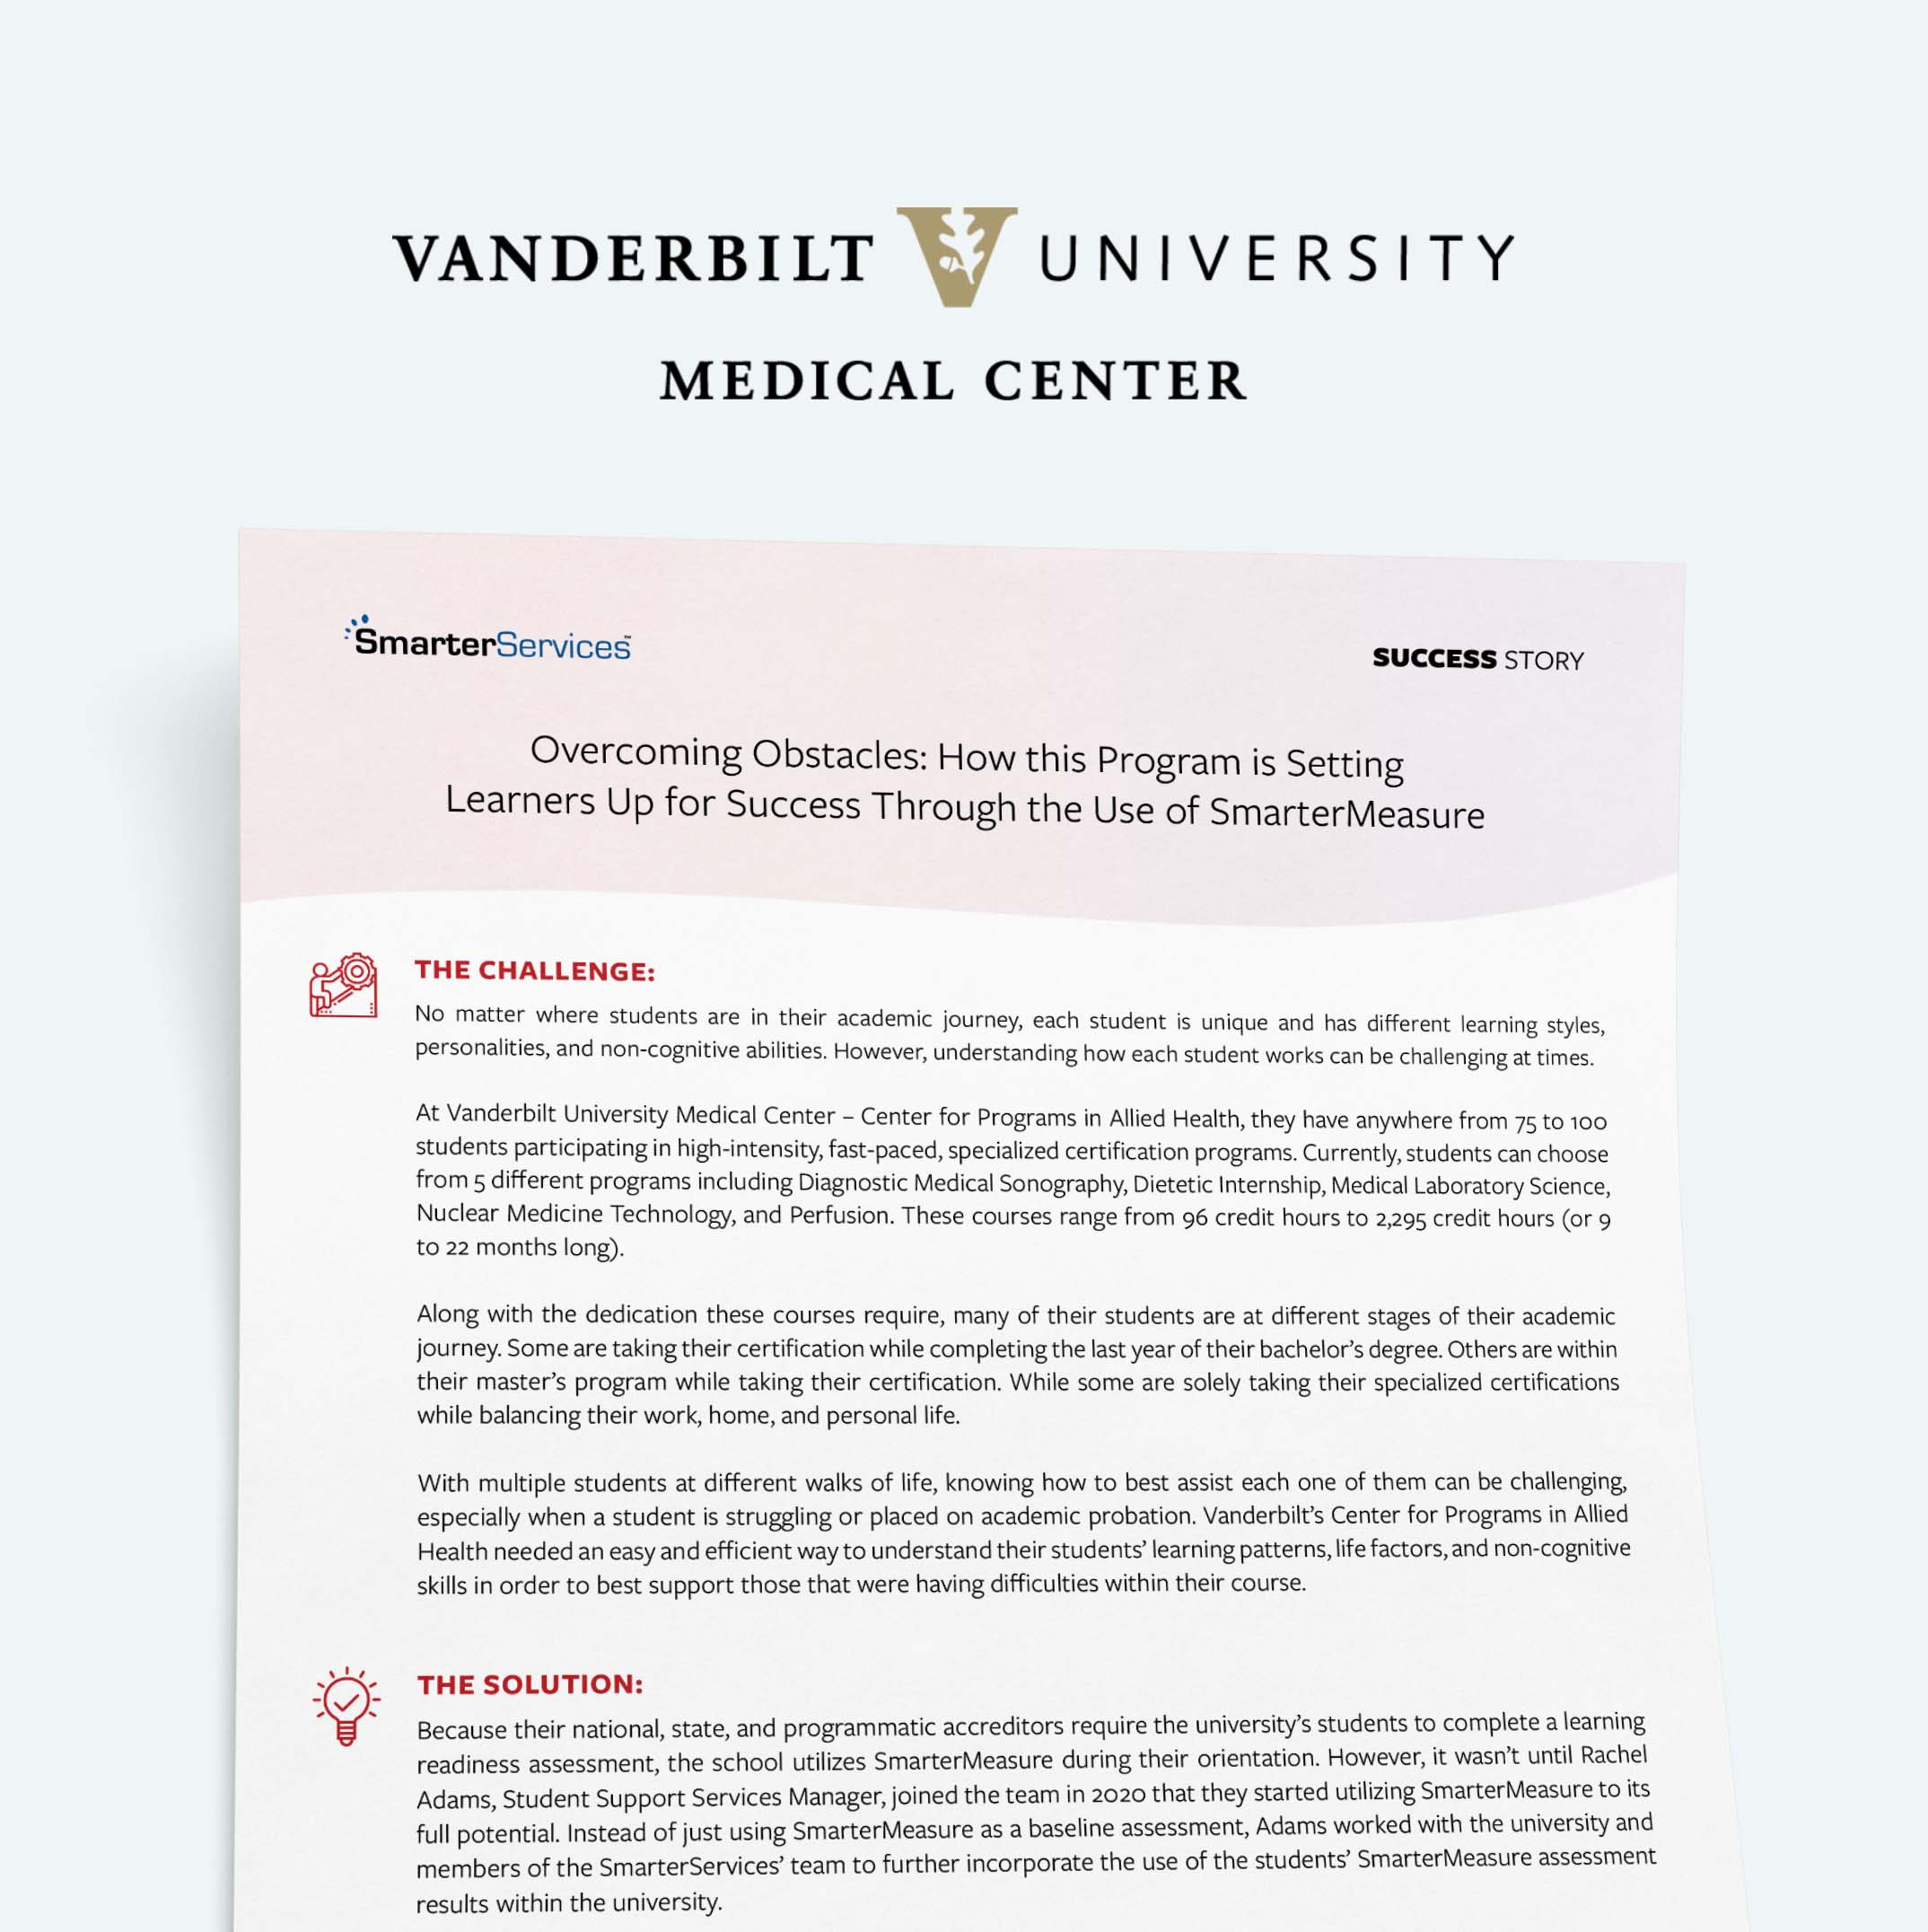 Vanderbilt University Medical Center – Program for Allied Health Case Study